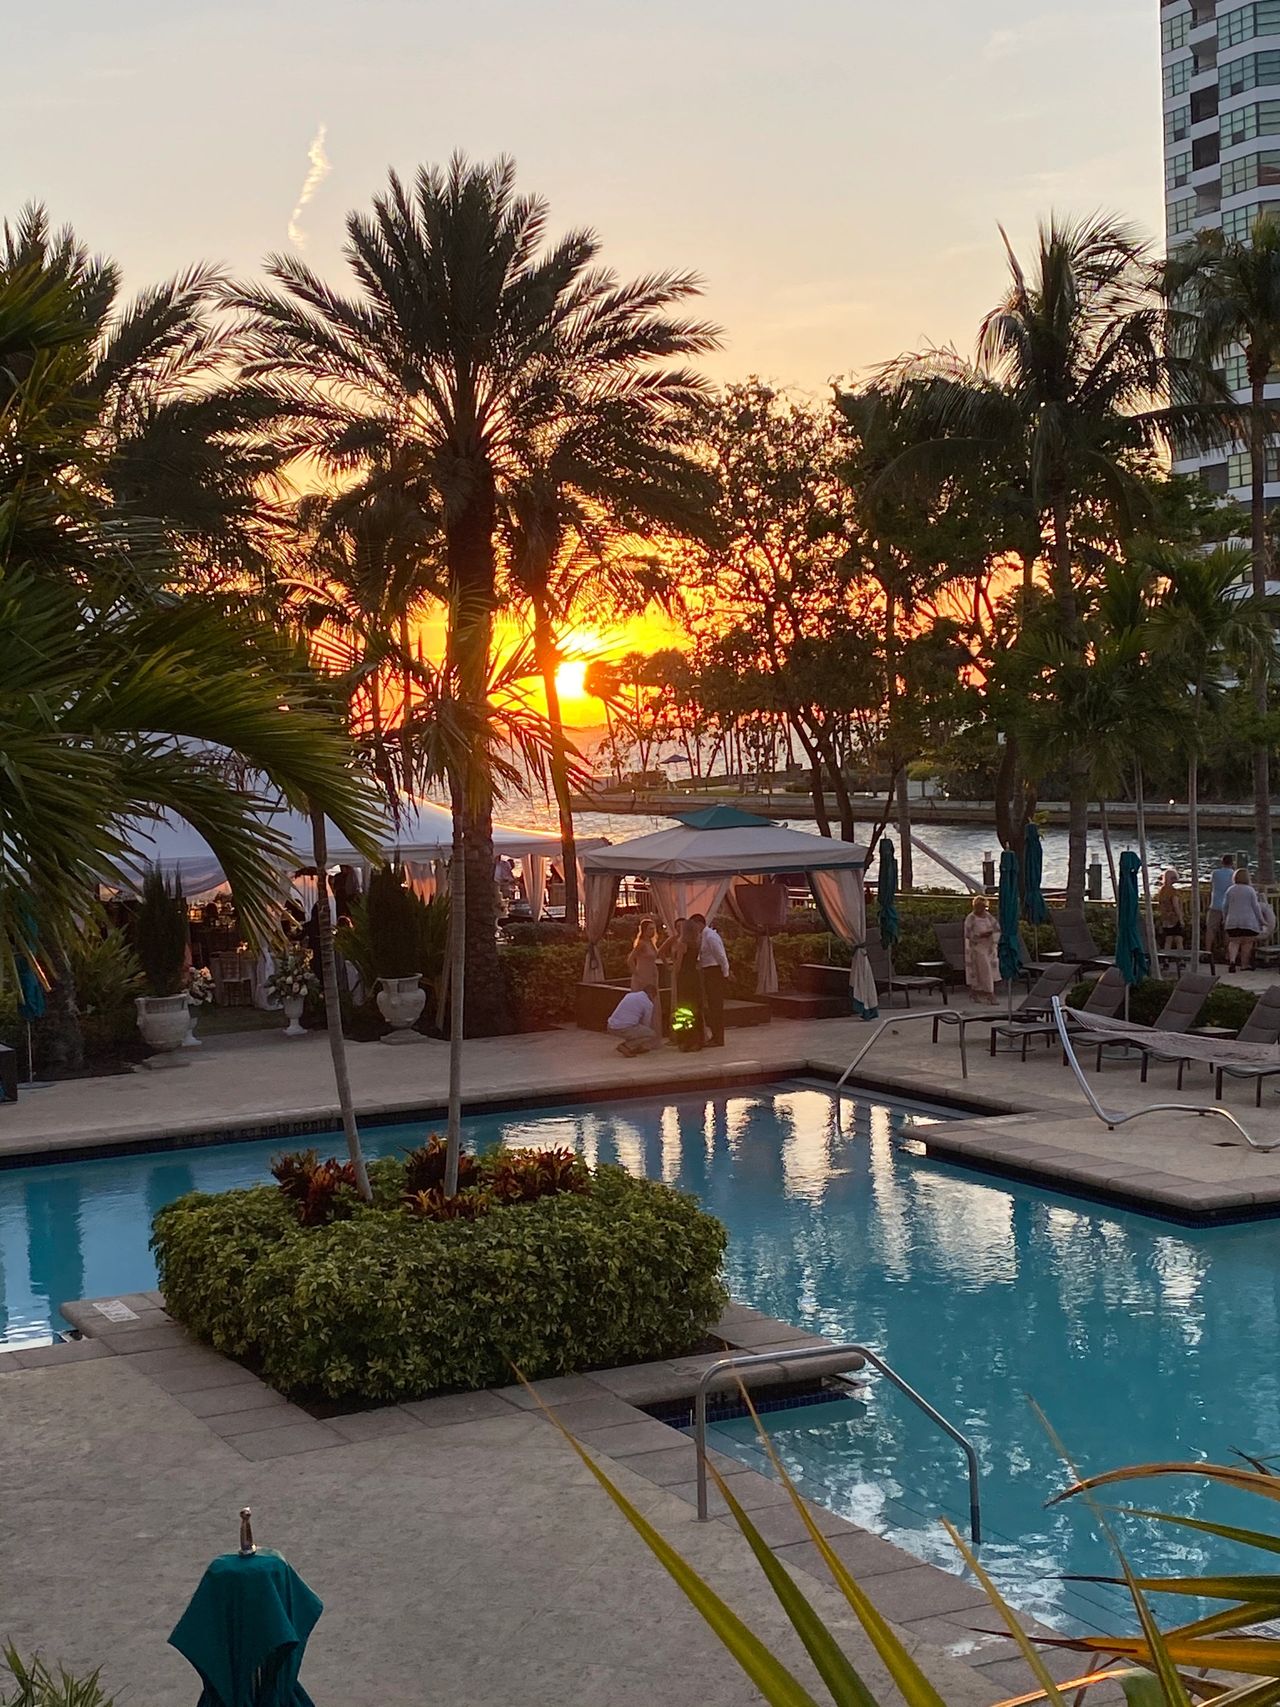 10 Florida summertime destinations for a relaxing getaway